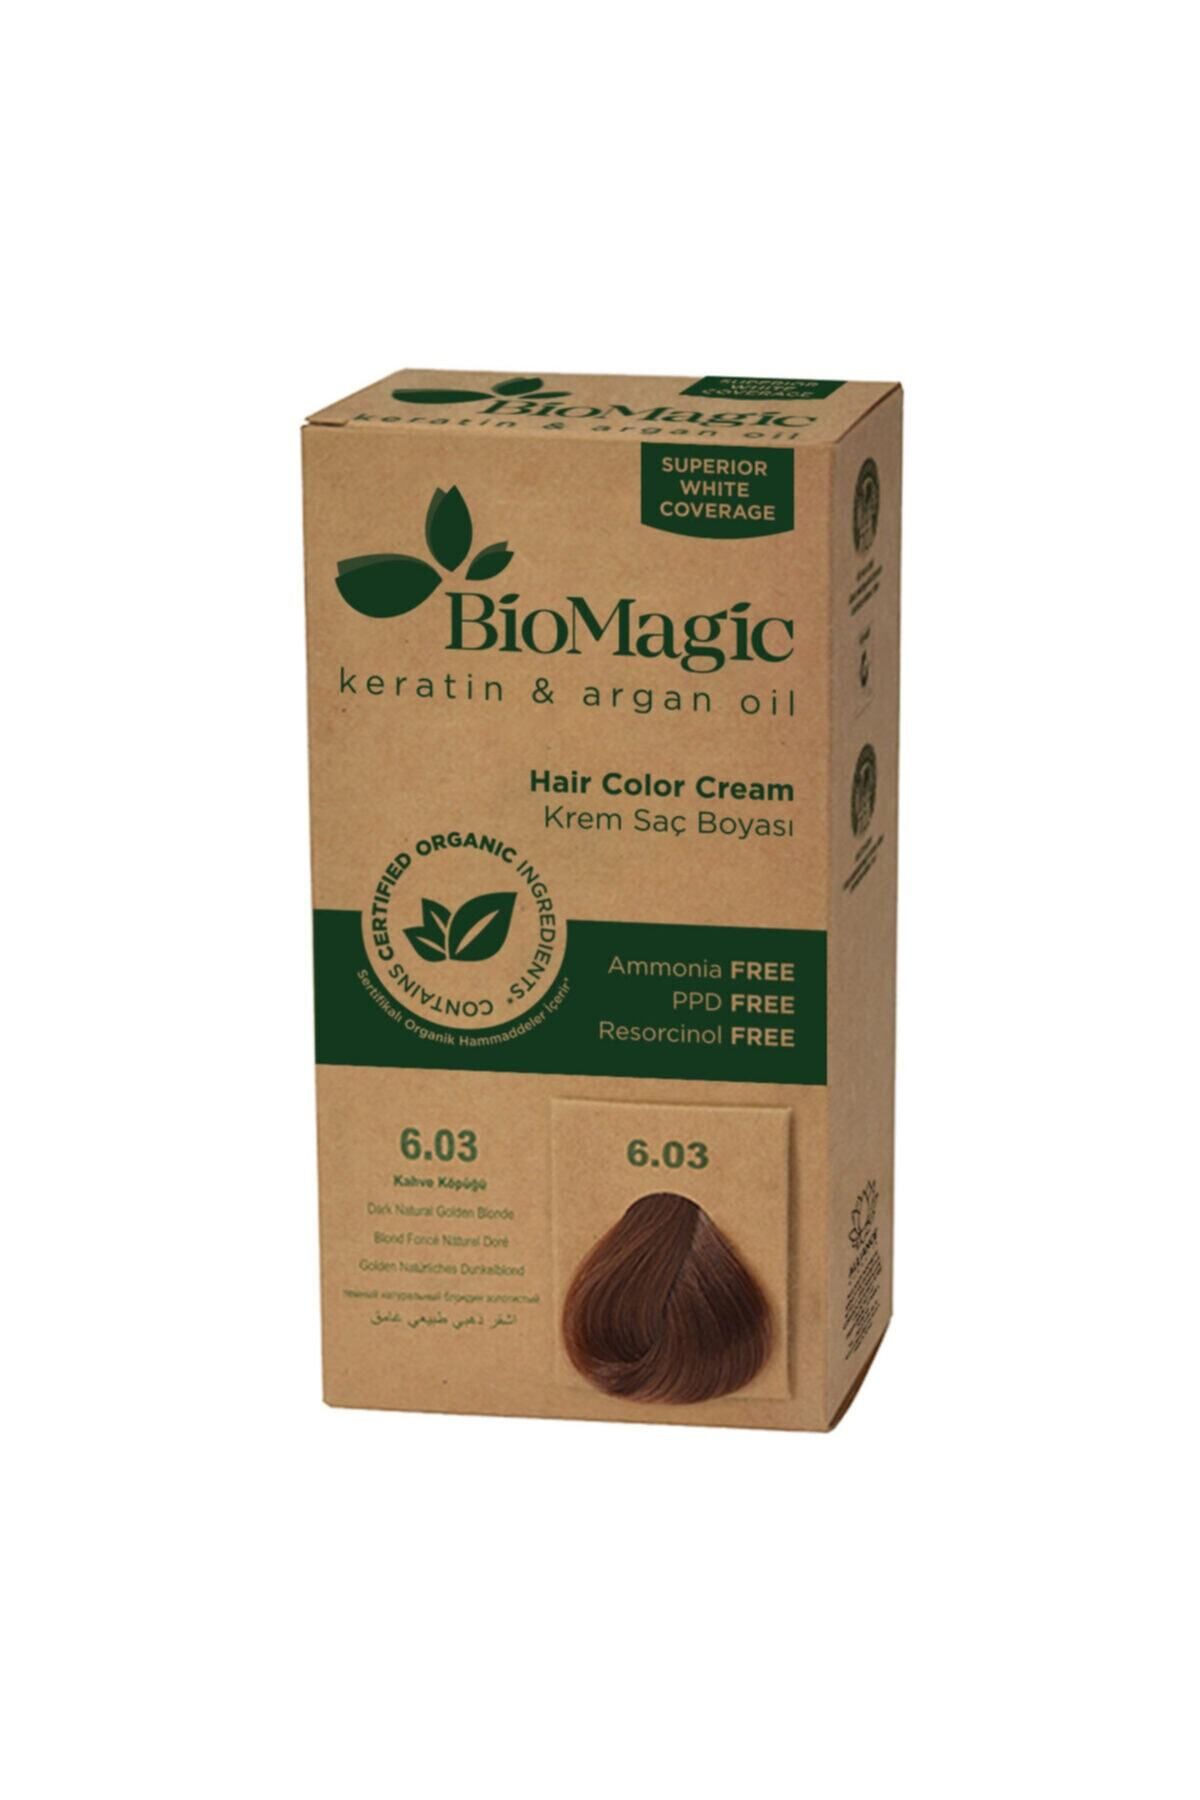 BioMagic Doğal Saç Boyası Kahve Köpüğü No: 6.03